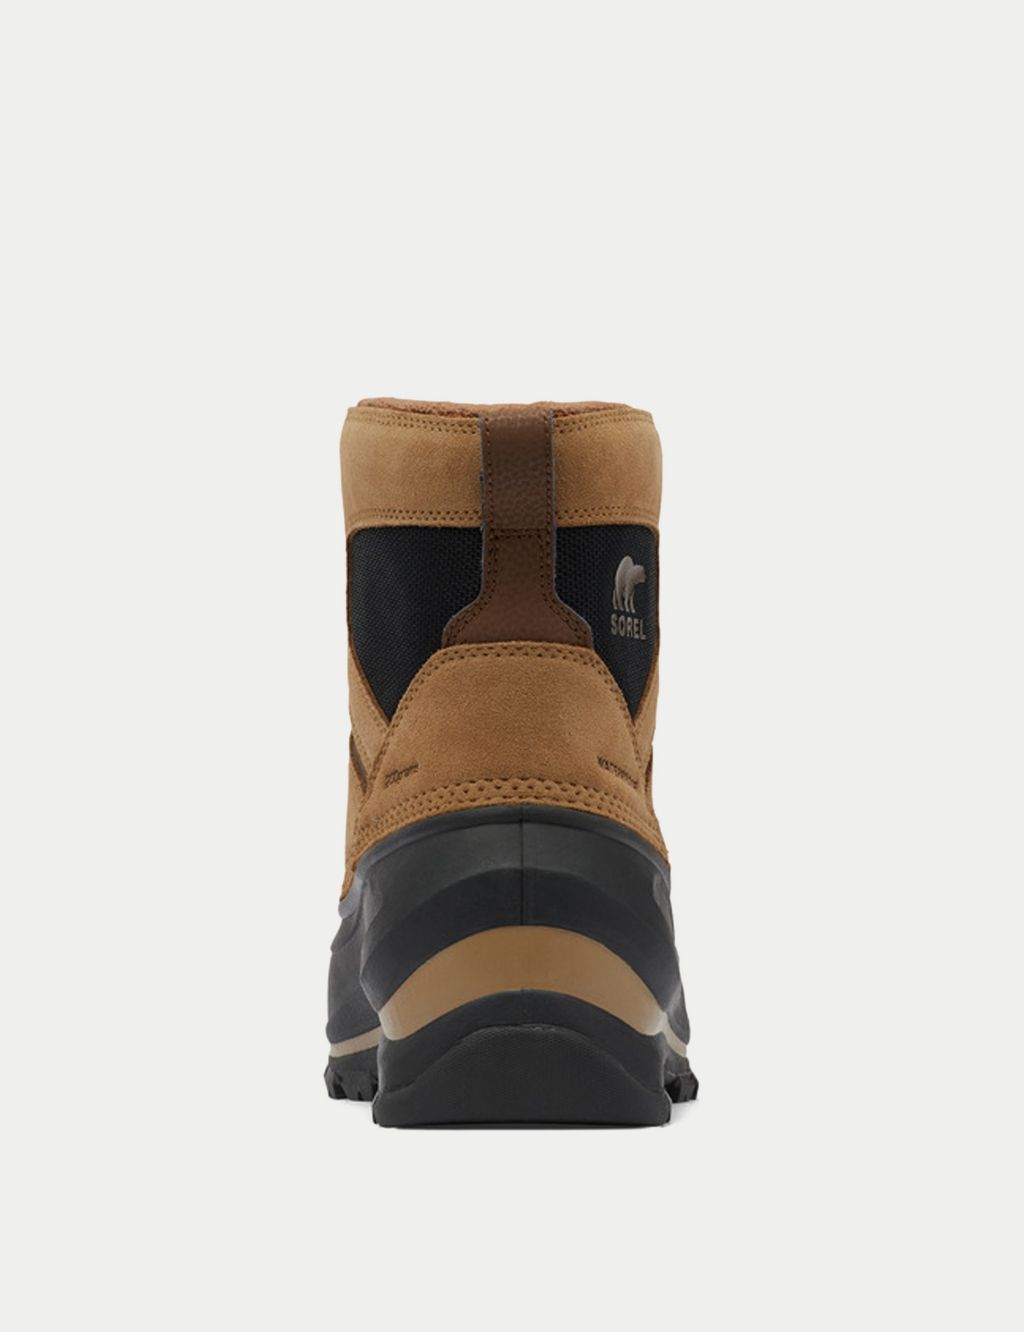 Buxton Leather Waterproof Walking Boots image 2